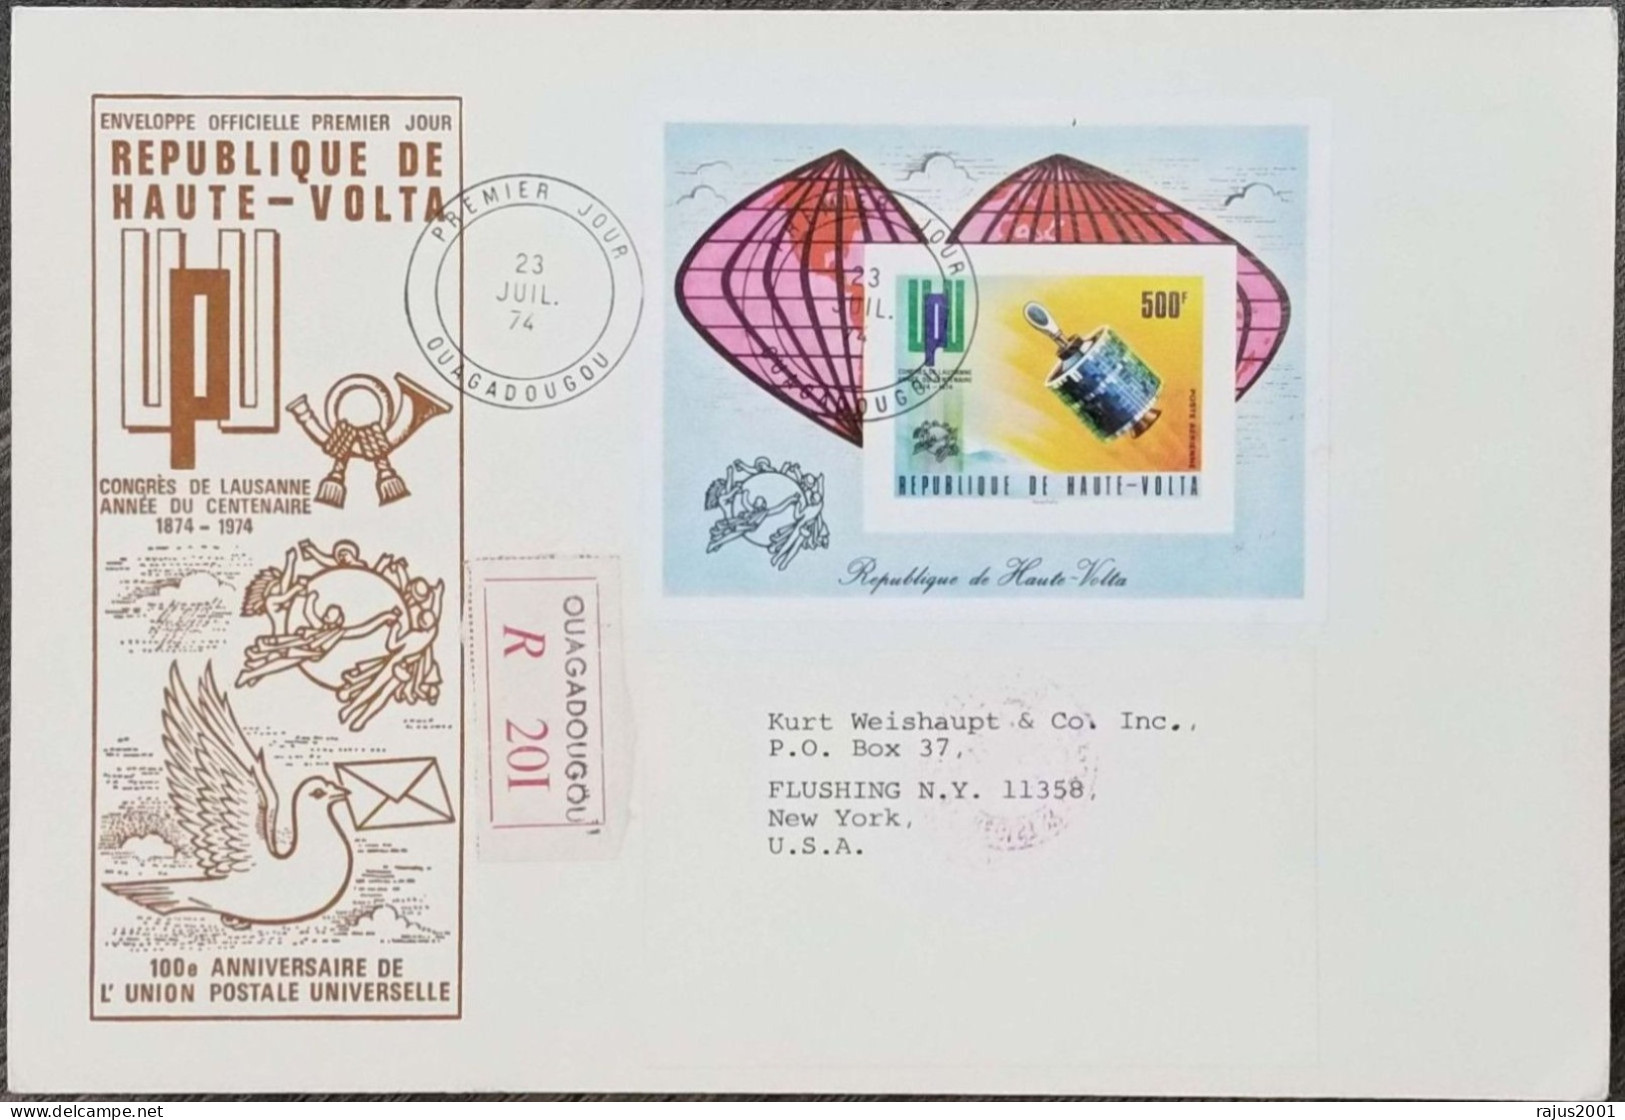 Centenary Of Universal Union Postal, U.P.U, UPU, Satellite, IMPERF MS Circulated Registered Cover FDC 1974 Upper Volta - UPU (Unione Postale Universale)